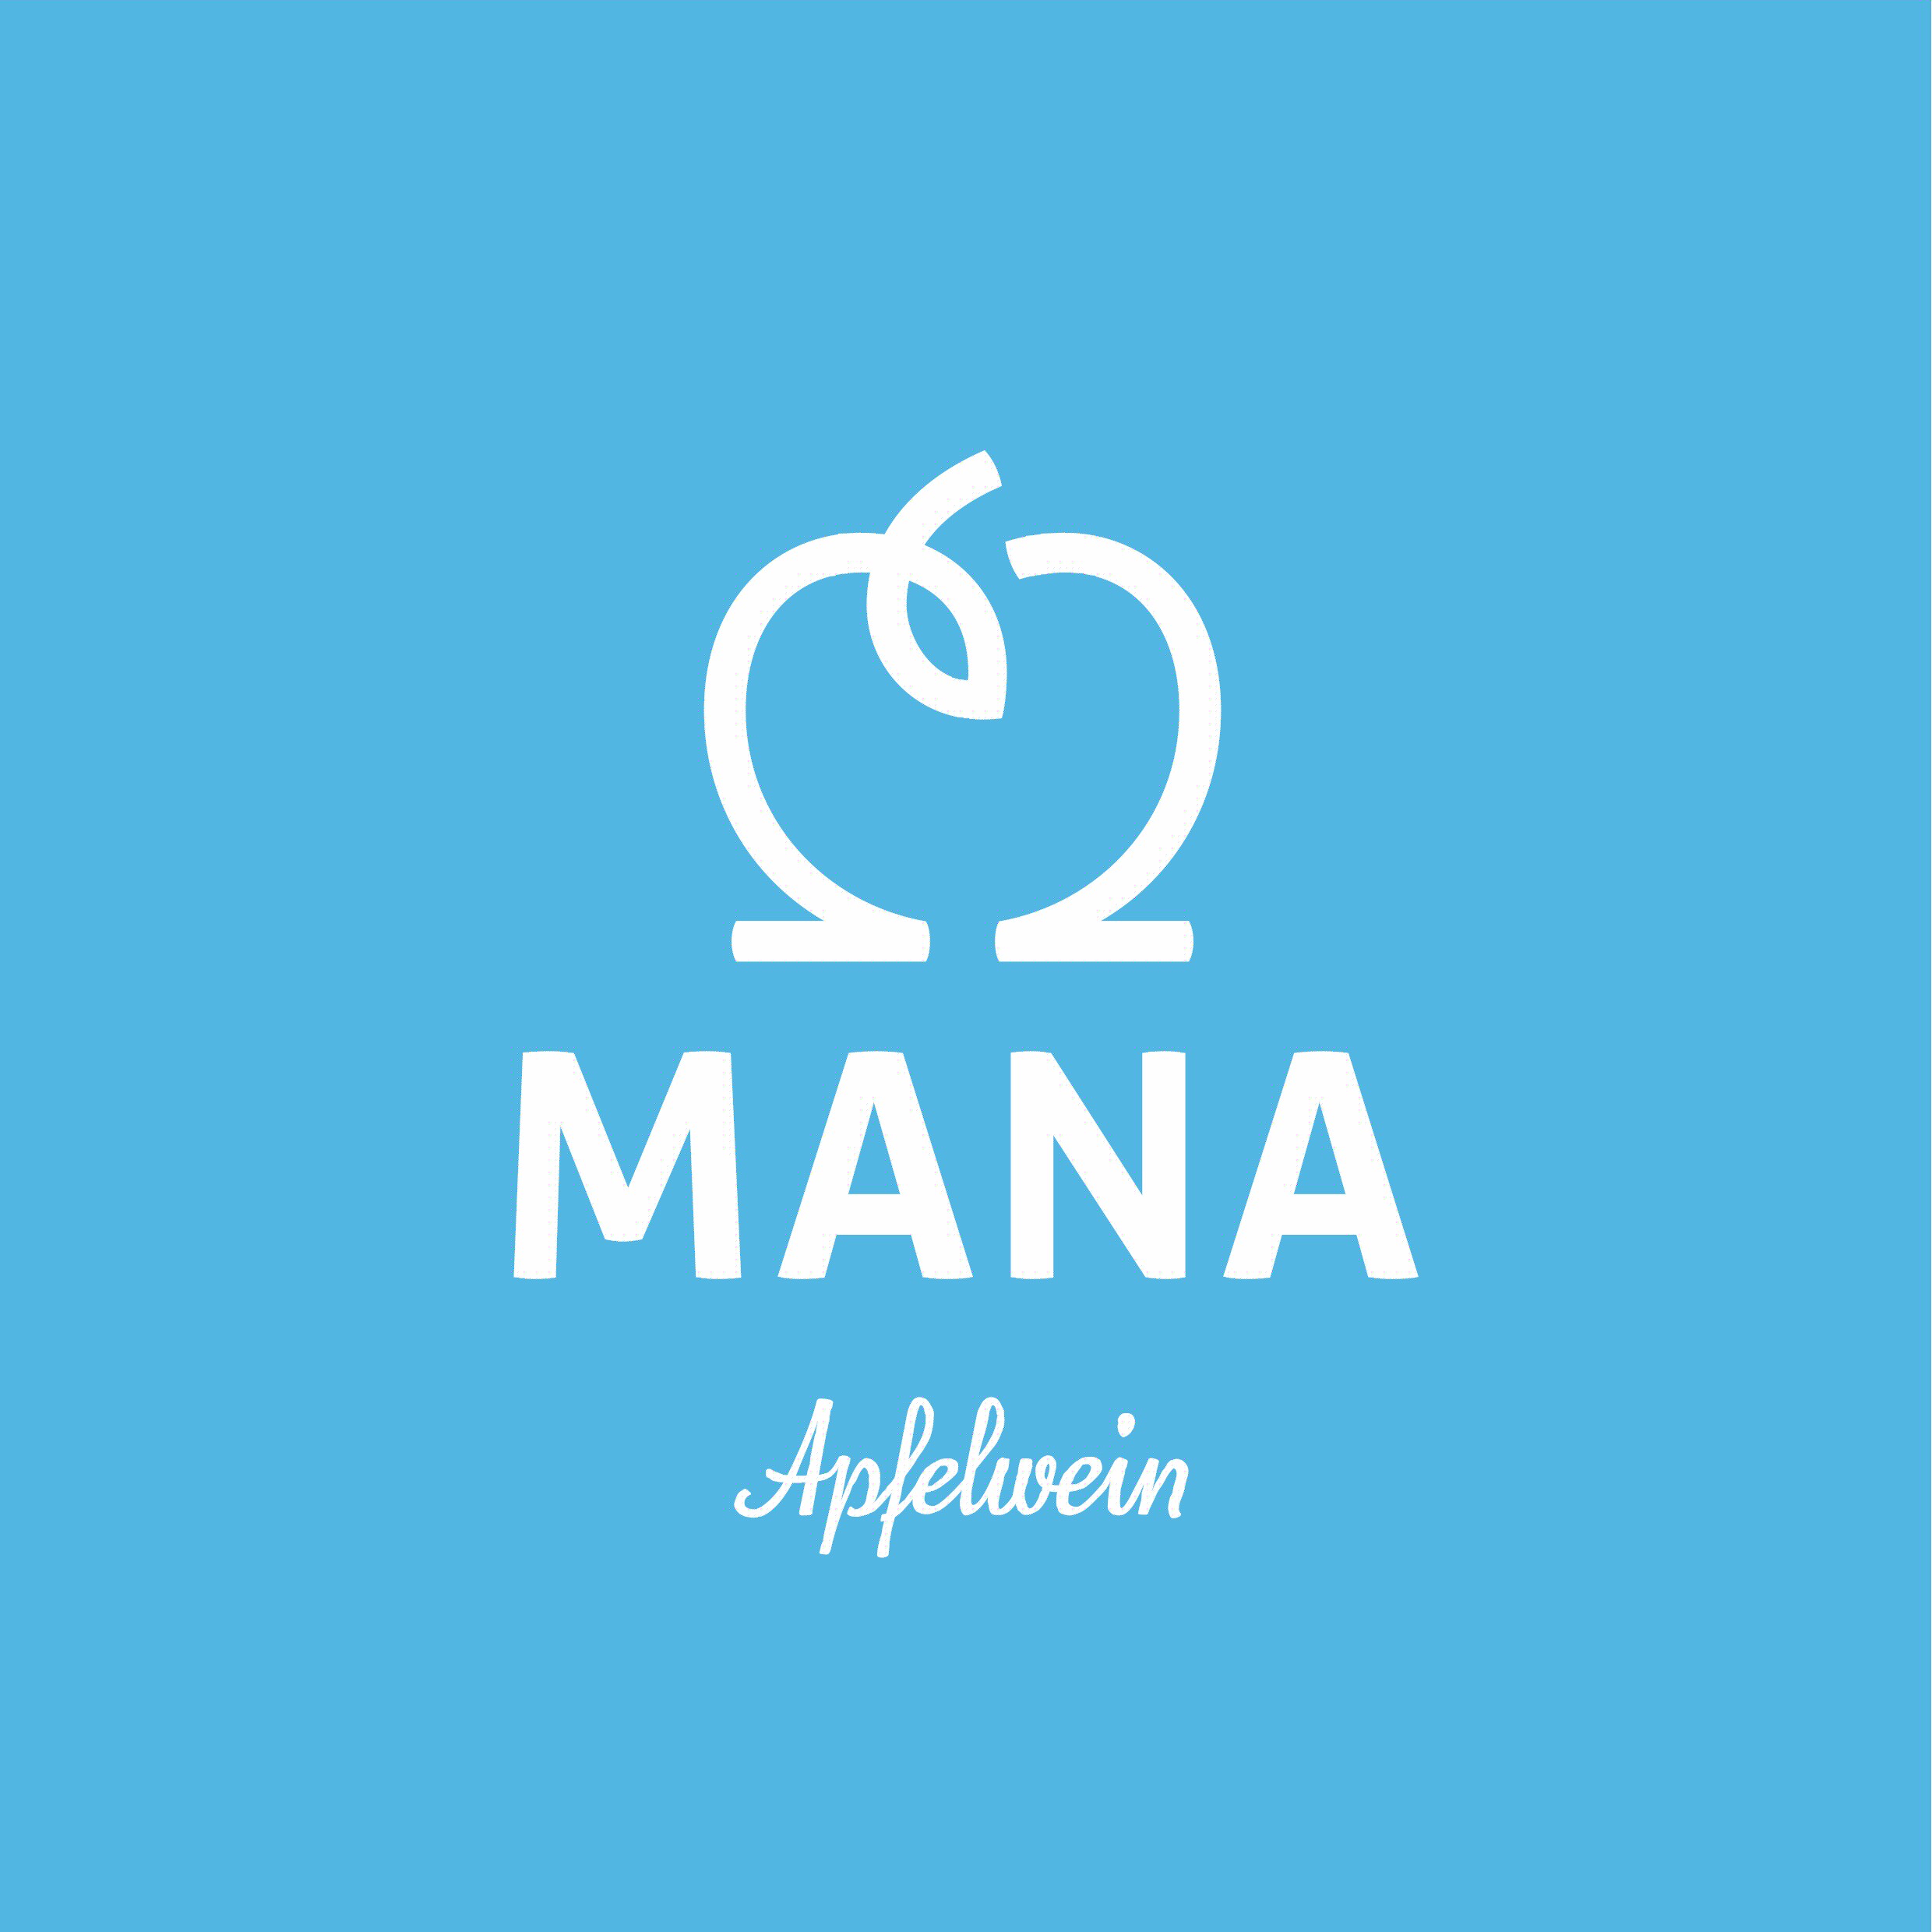 Mana_logo_Apfelwein